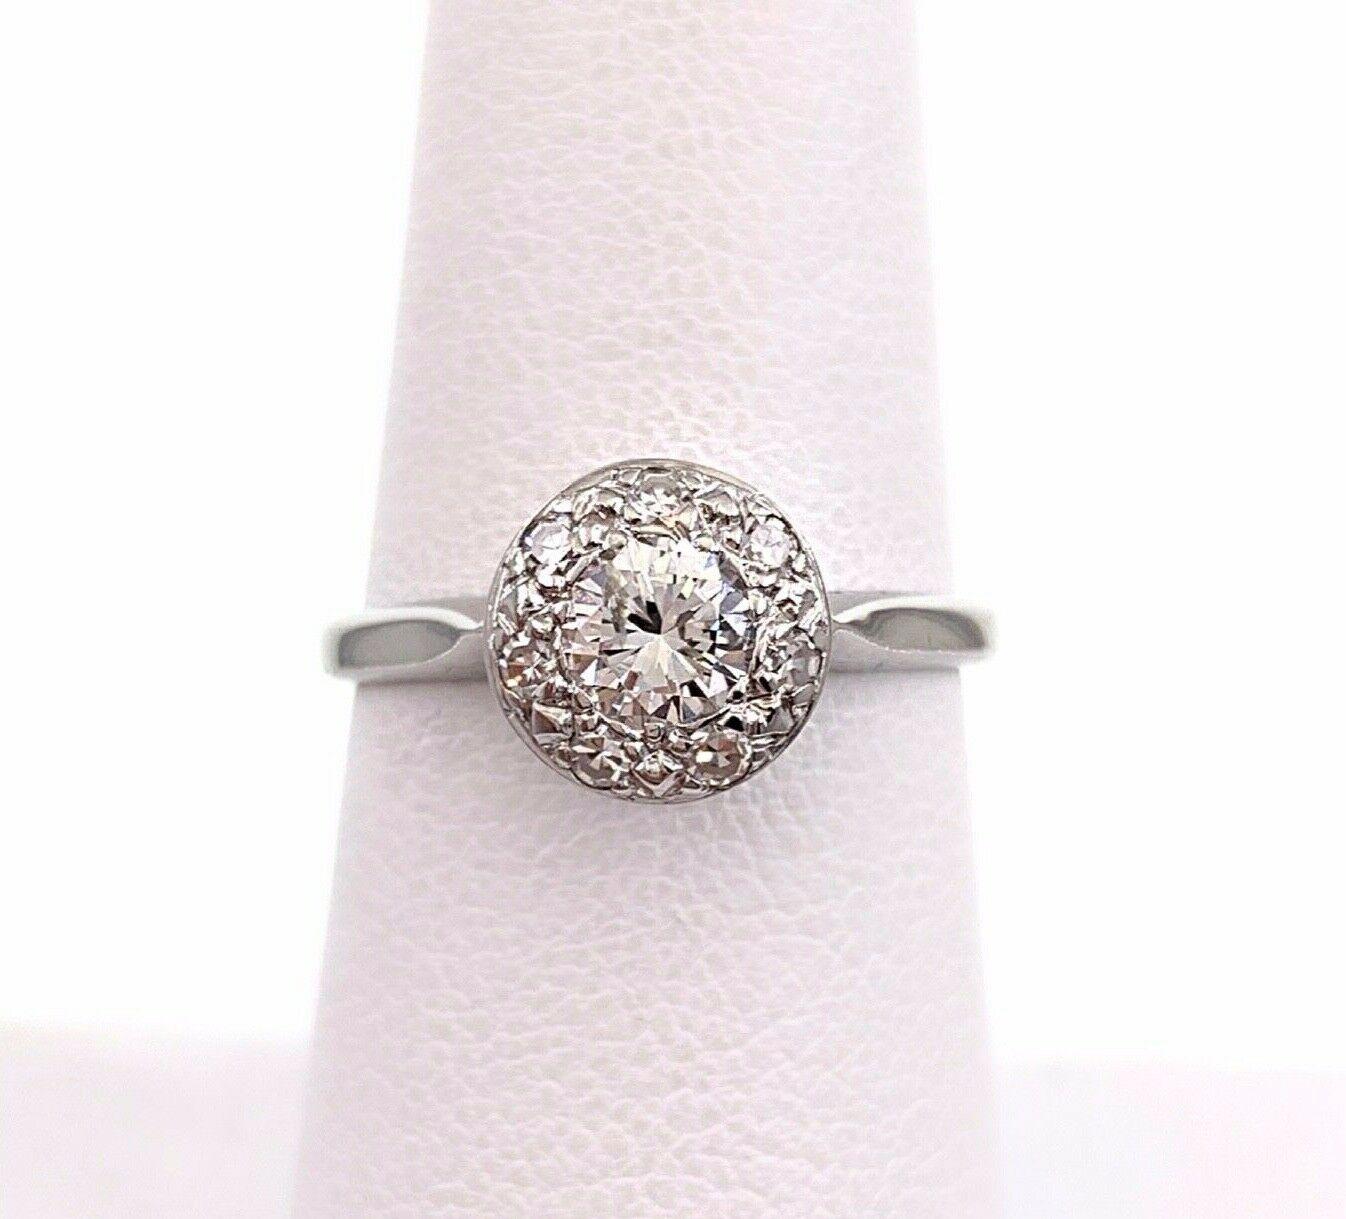 Vintage Diamond Ring
Style:  Diamond Halo Engagement Ring
Era:  1940's
Metal:  14K White Gold
Size / Measurements: 6.5, sizable
TCW:  0.60 carats total
Main Diamond: 0.45 carat Round Brilliant Cut
Accent Diamonds:  7 Single Cut Diamonds
Color &